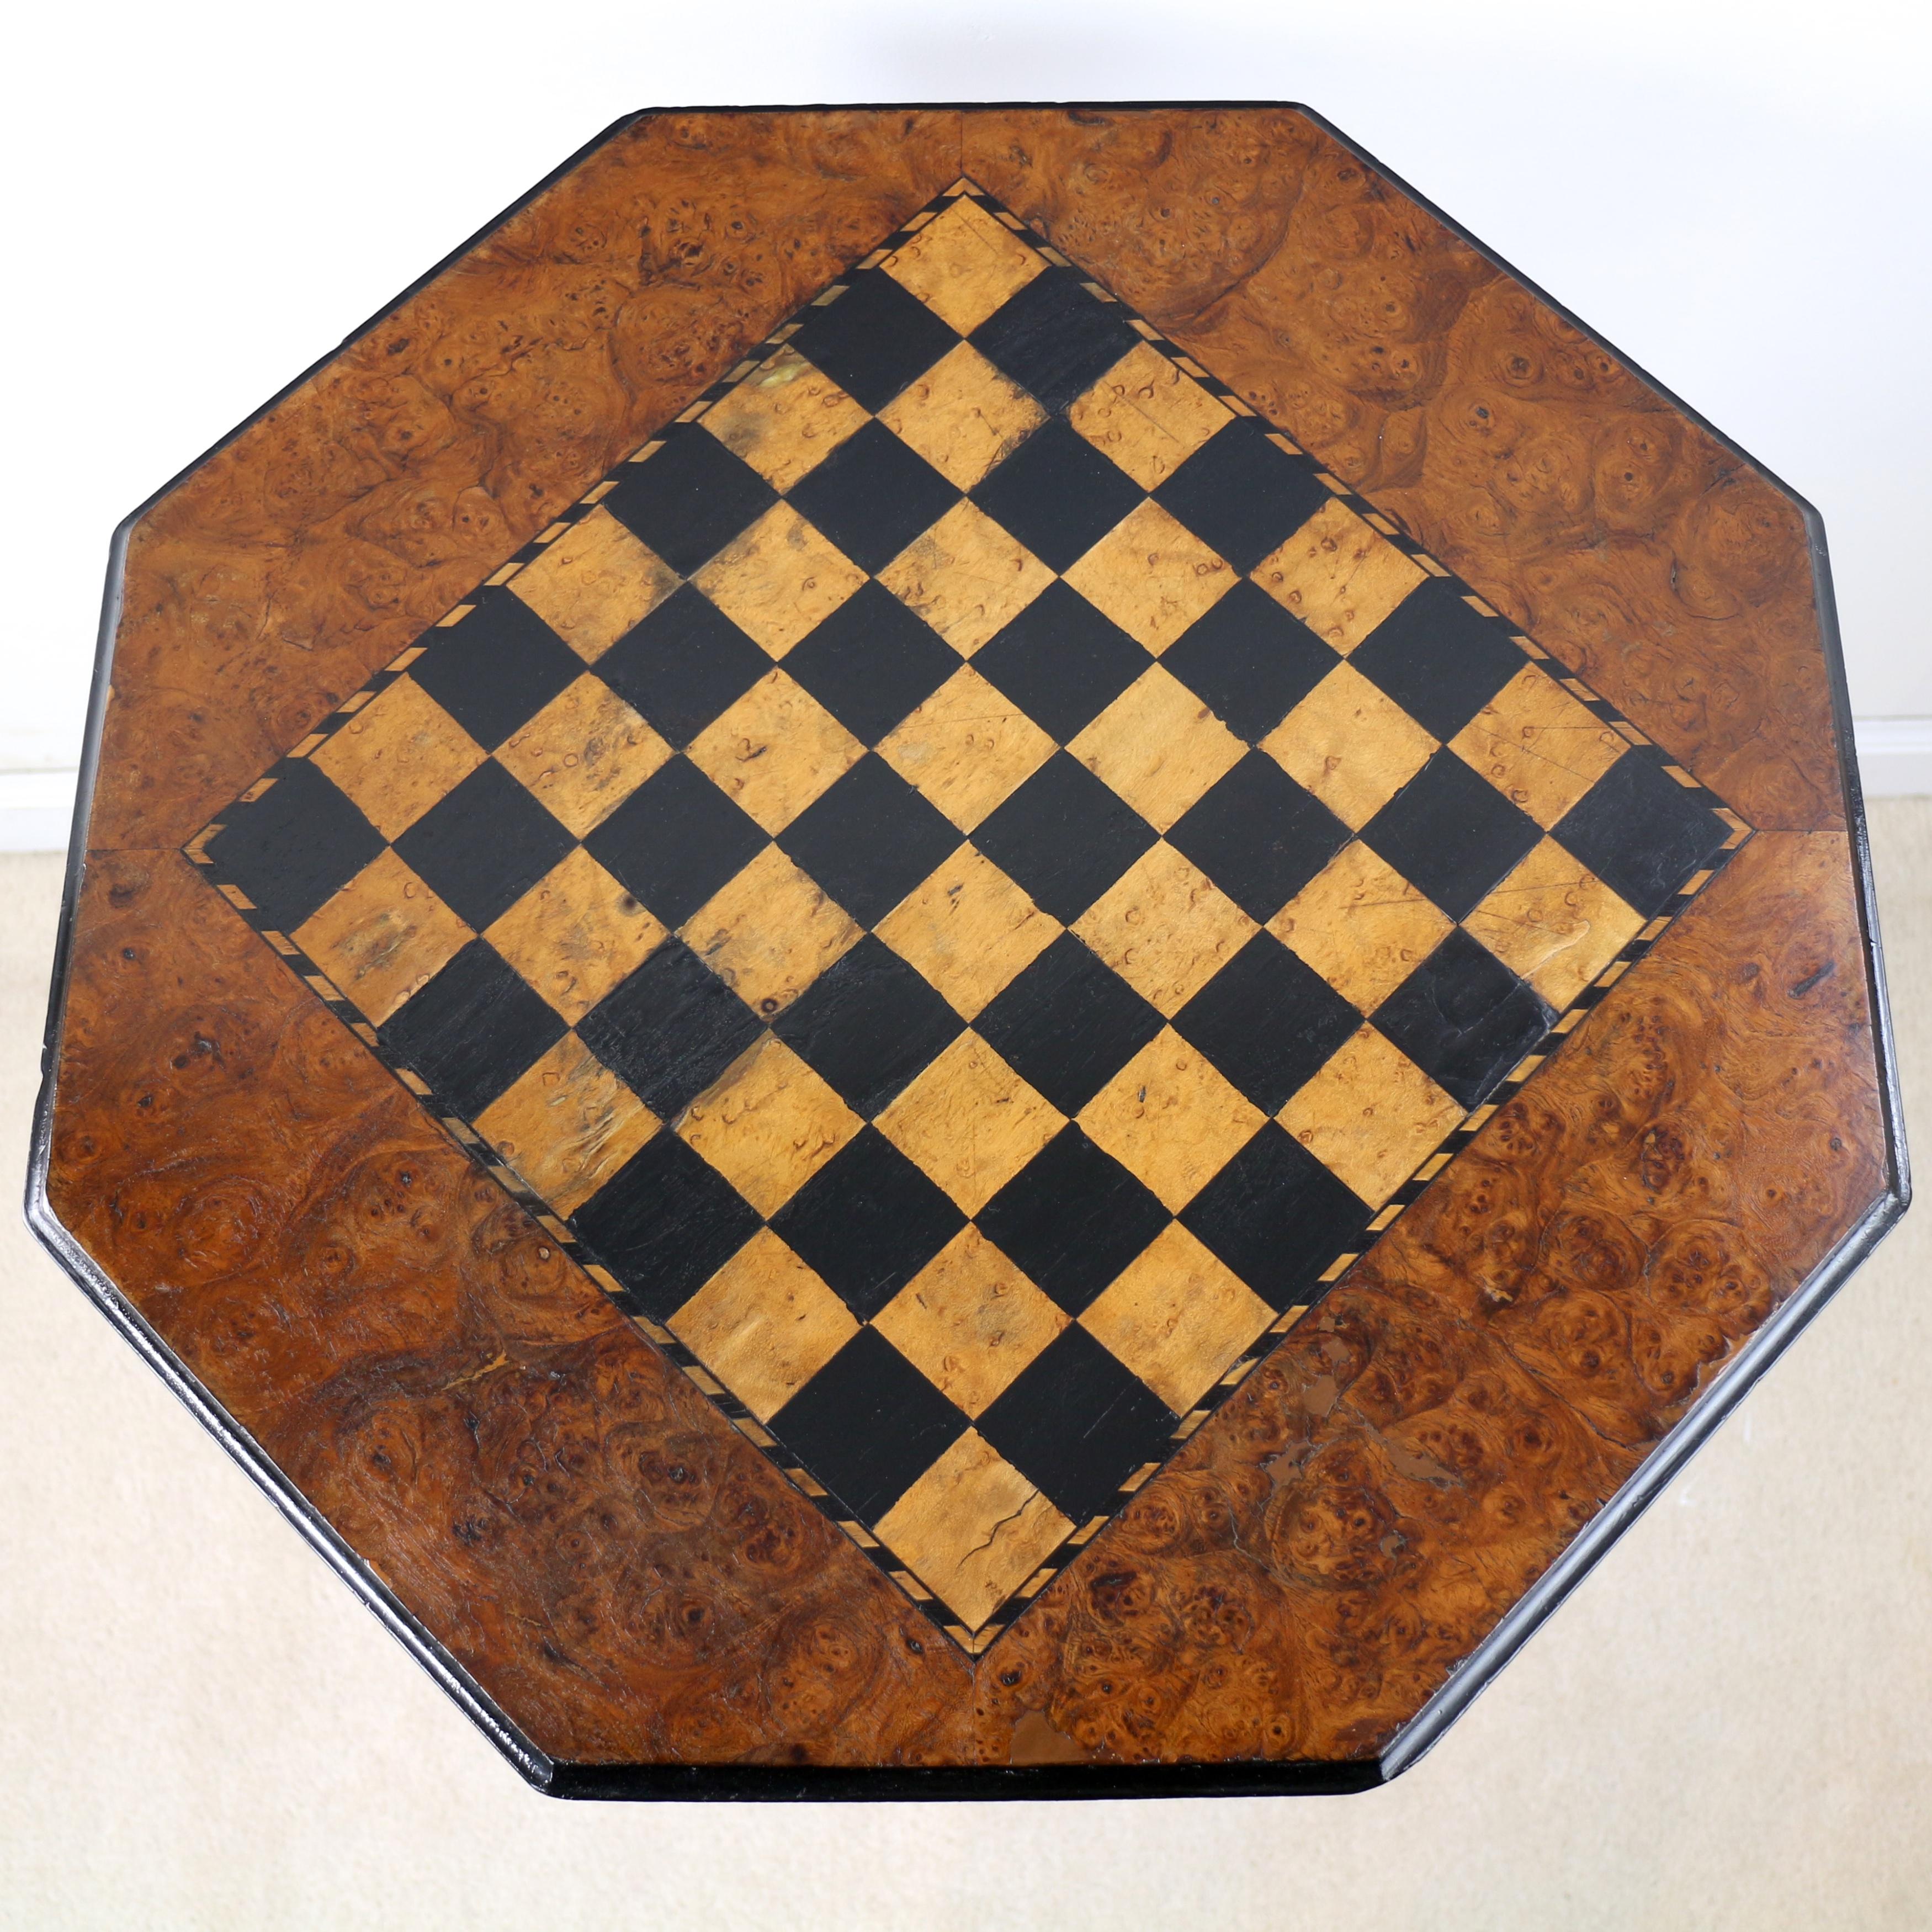 19th Century Antique Irish Killarney Yew Inlaid Chess Top Games Occasional Table